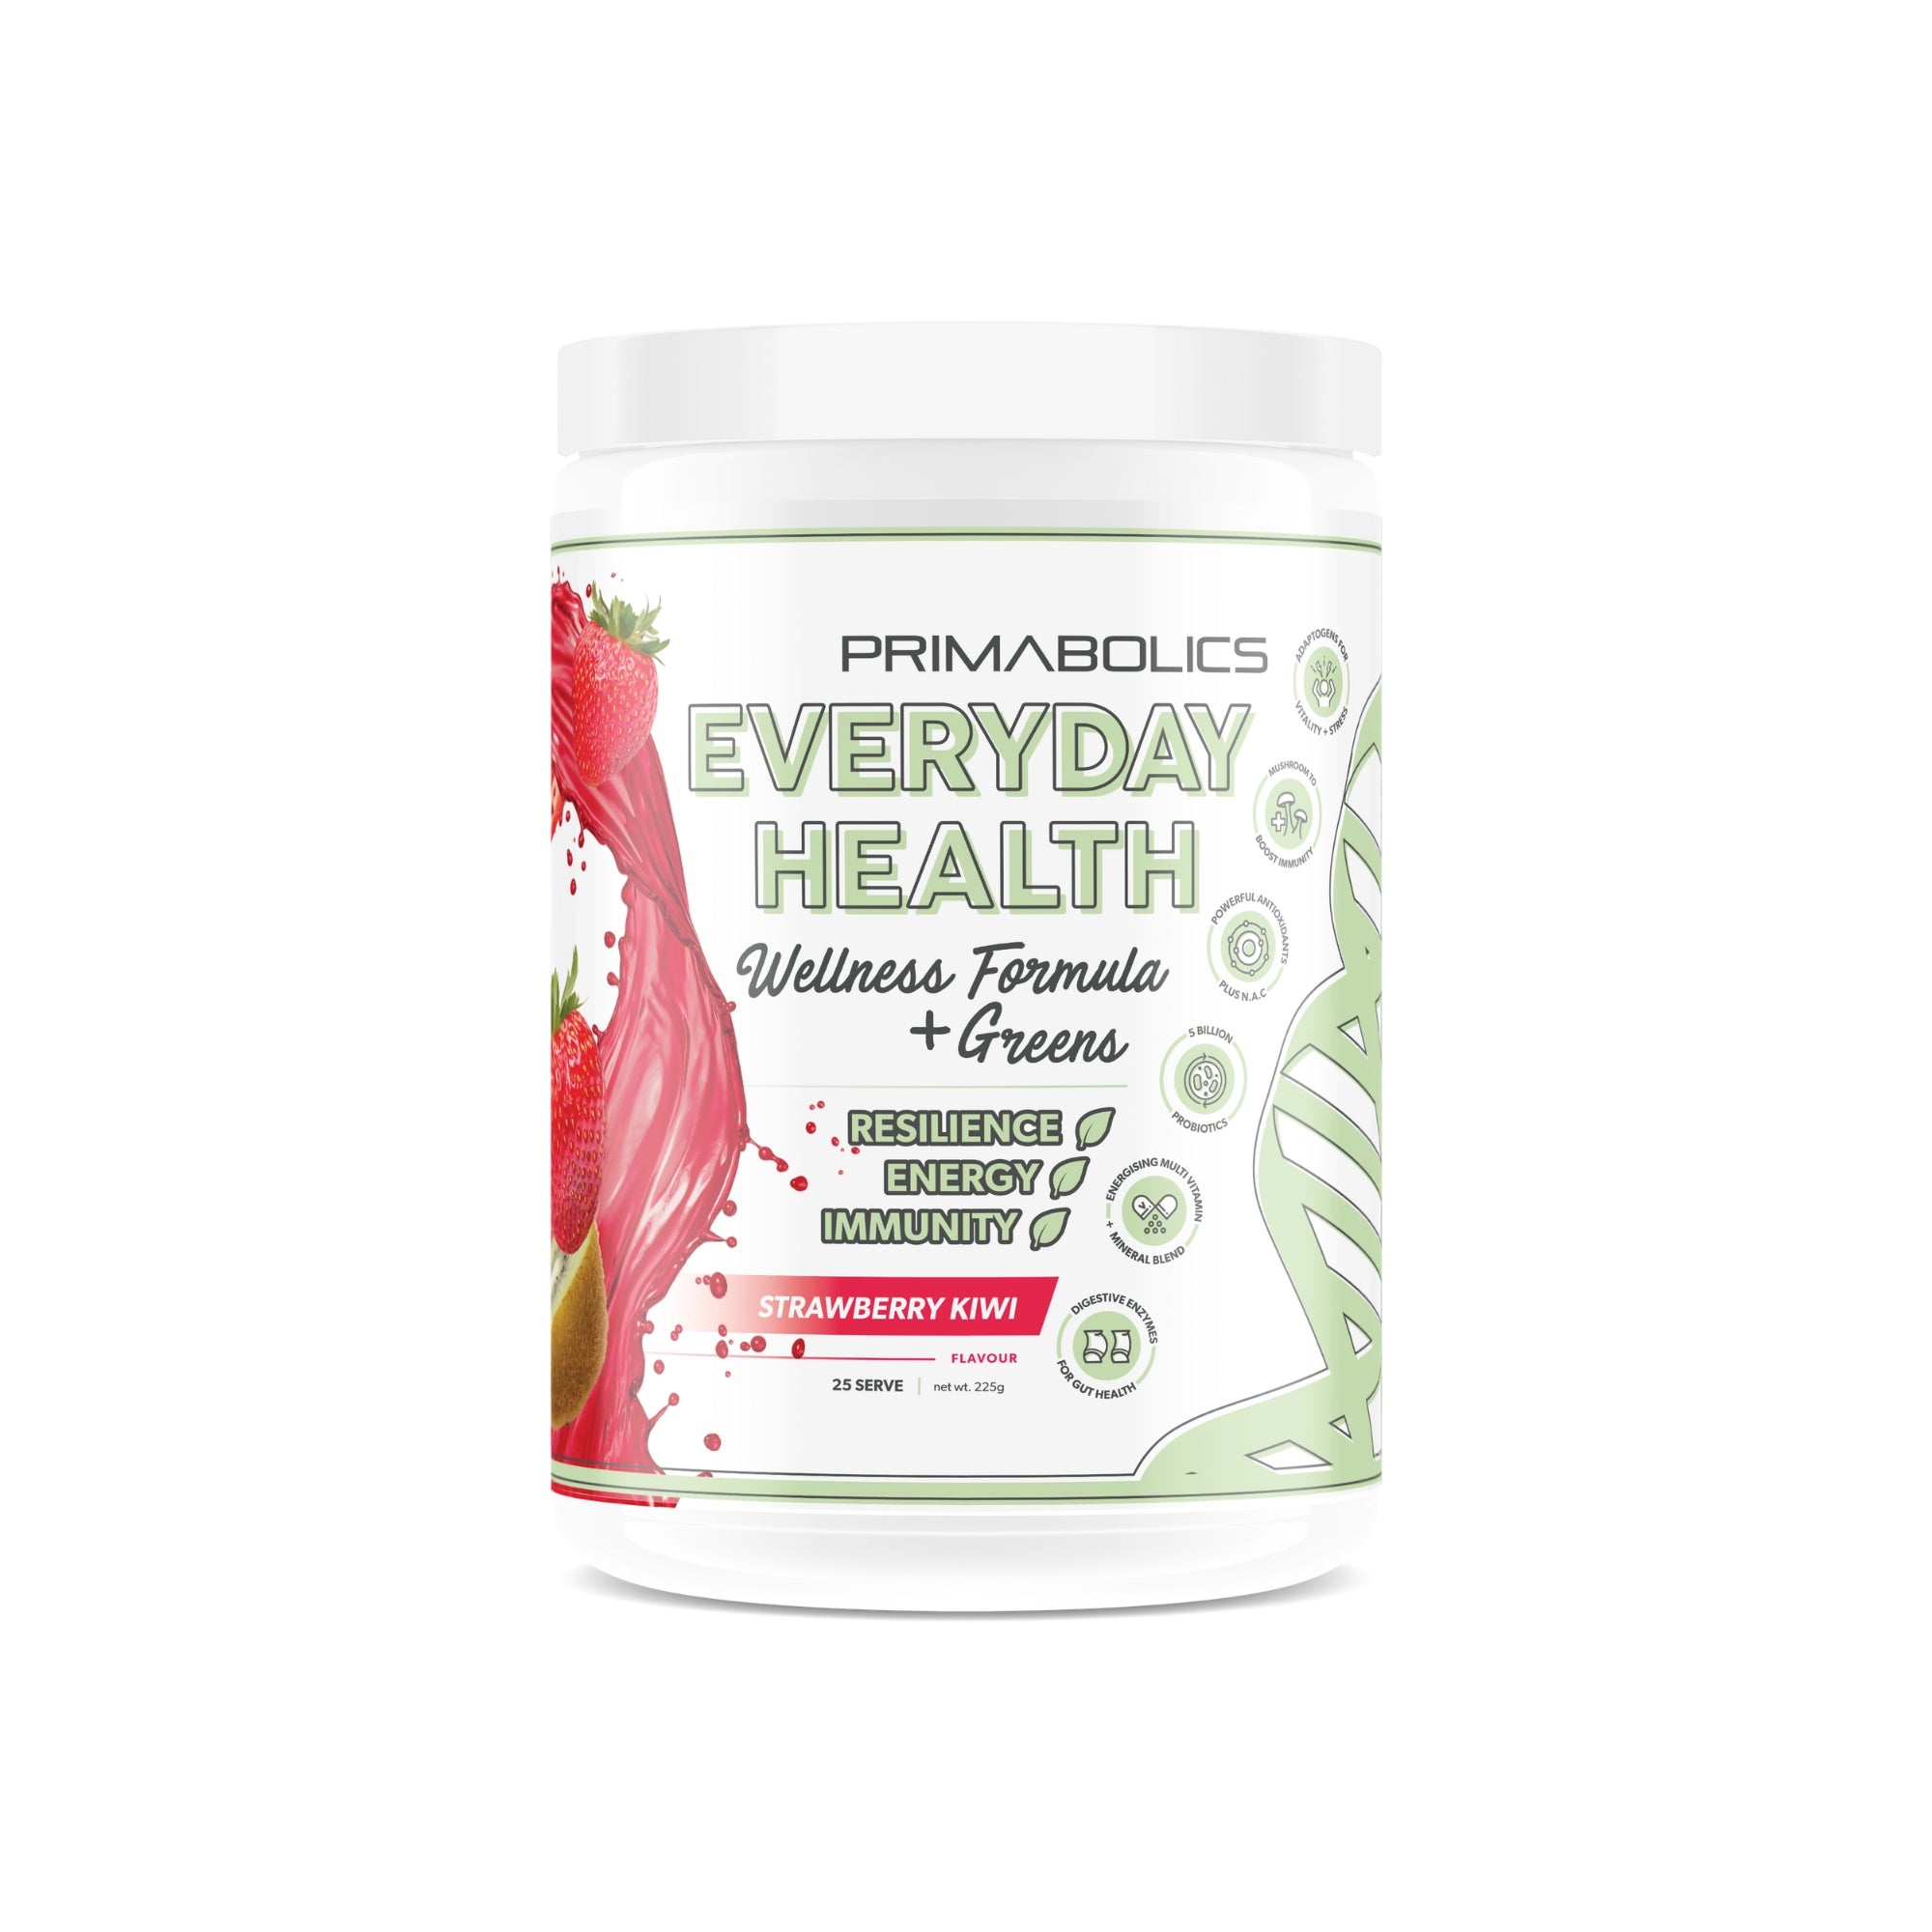 Primabolics Everyday Health Wellness Formula + Greens